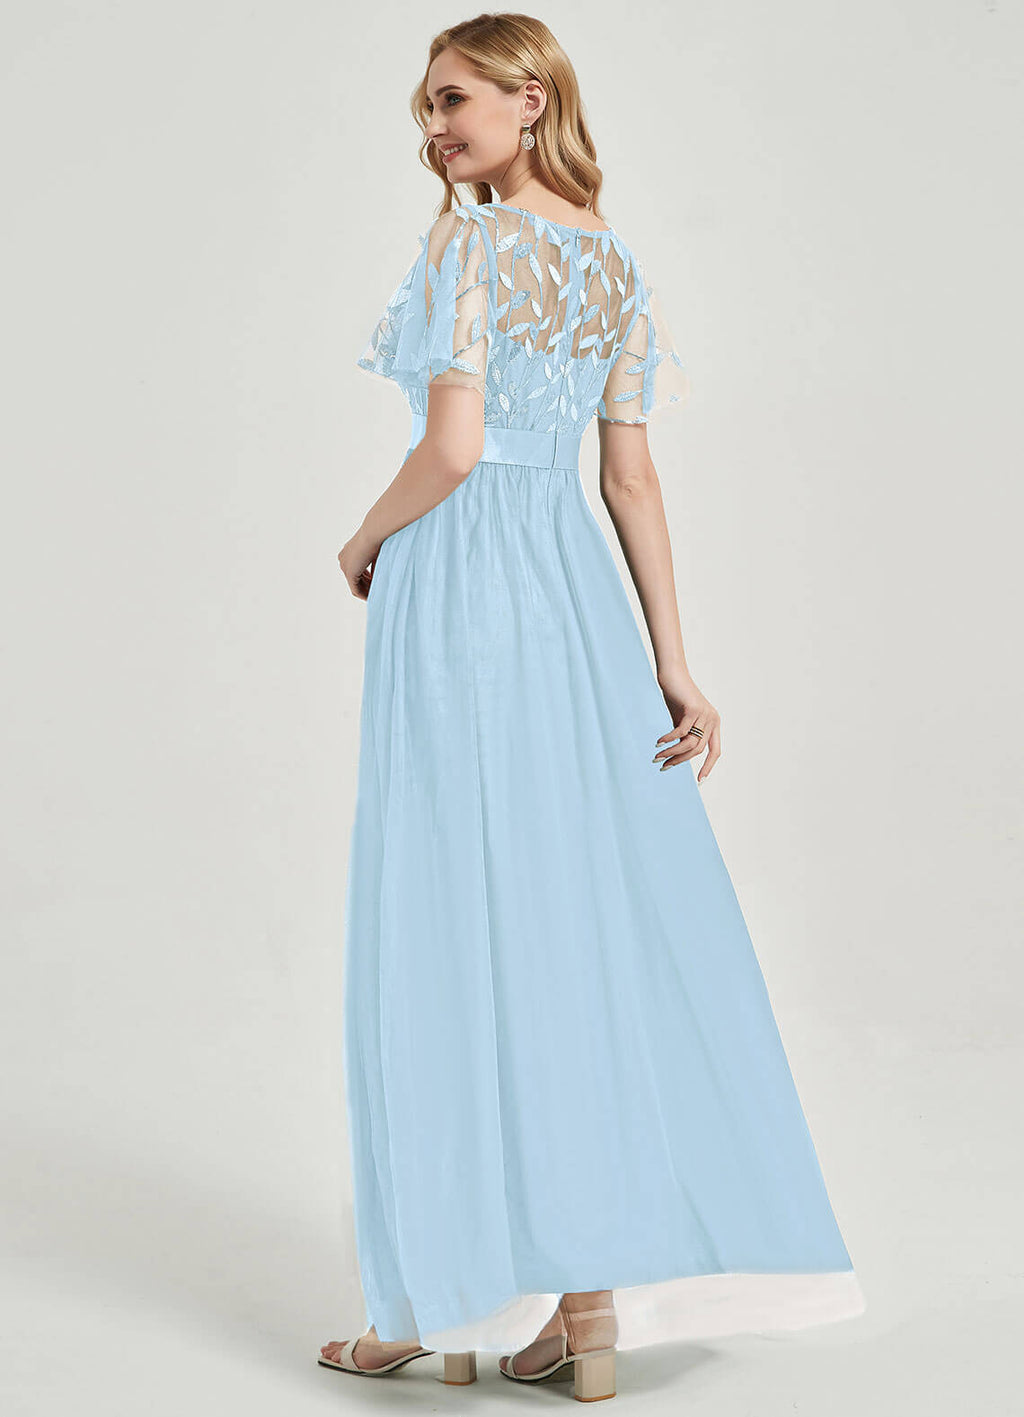 NZ Bridal Cornflower Blue Sequin Tulle Short Sleeves Prom Dress 00904EP Miyuki a